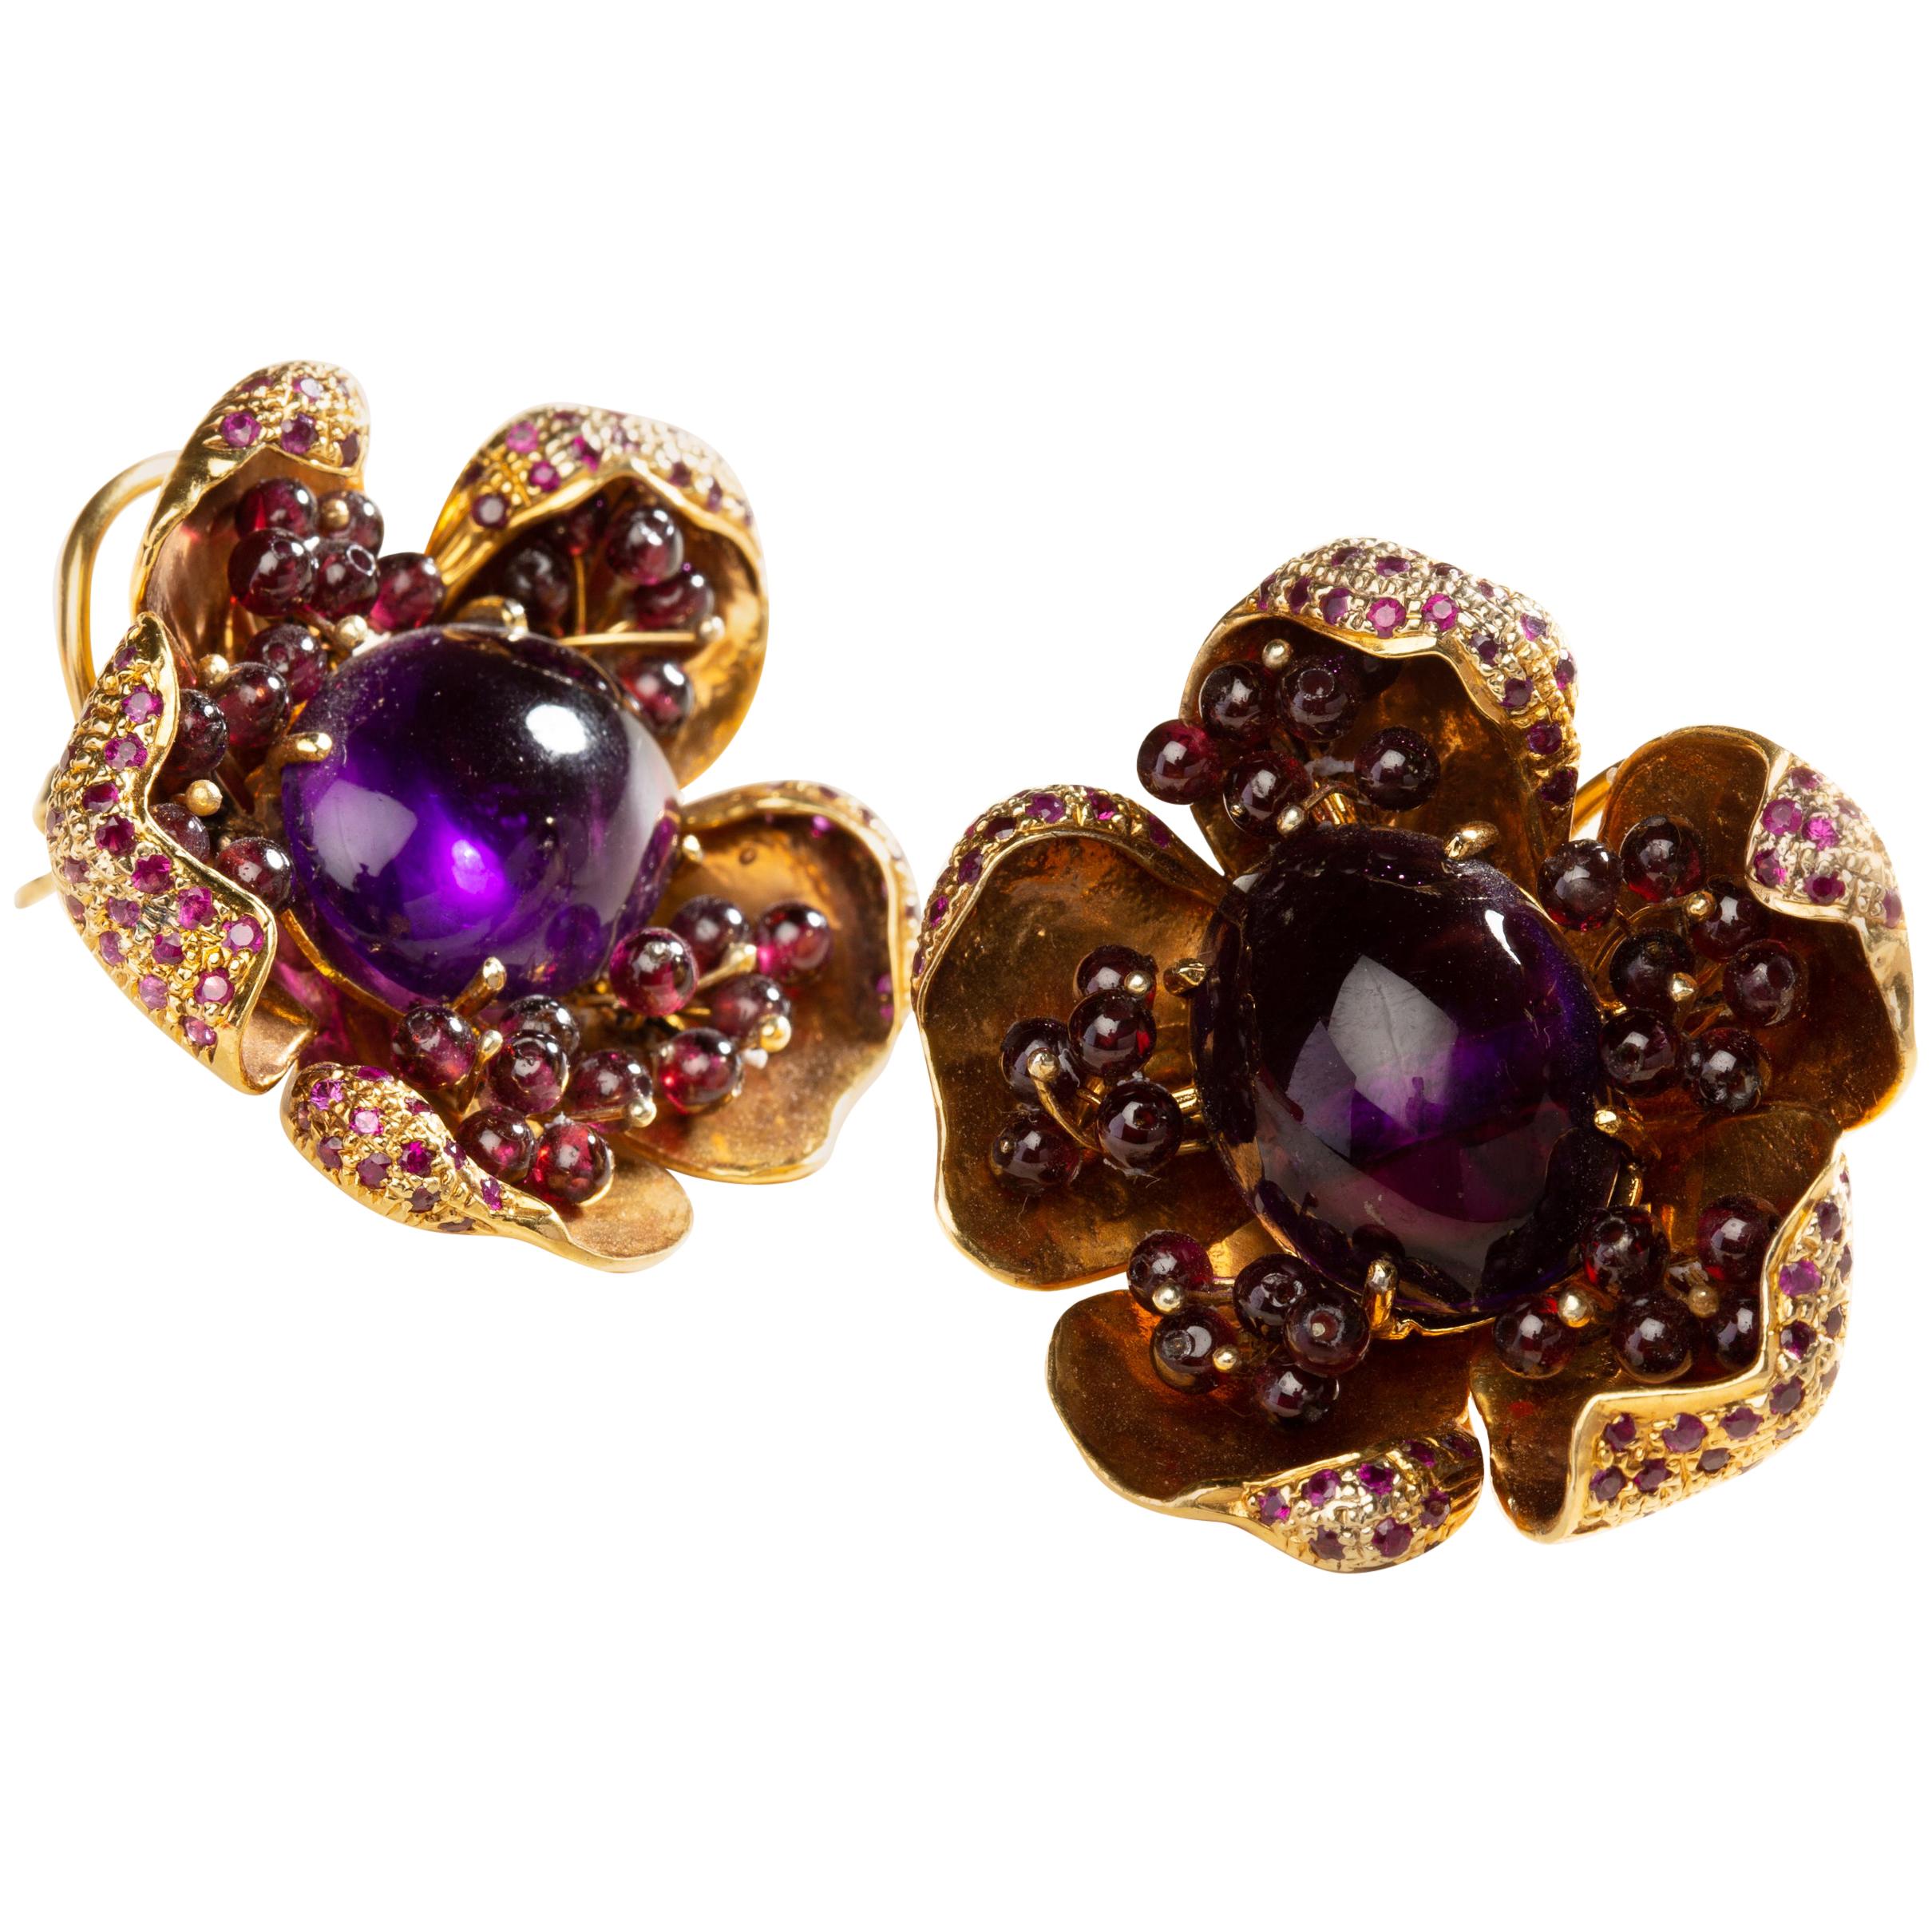 Amethyst Flower Earrings in Silver with 24 Karat Gold Vermeil and Gemstones For Sale